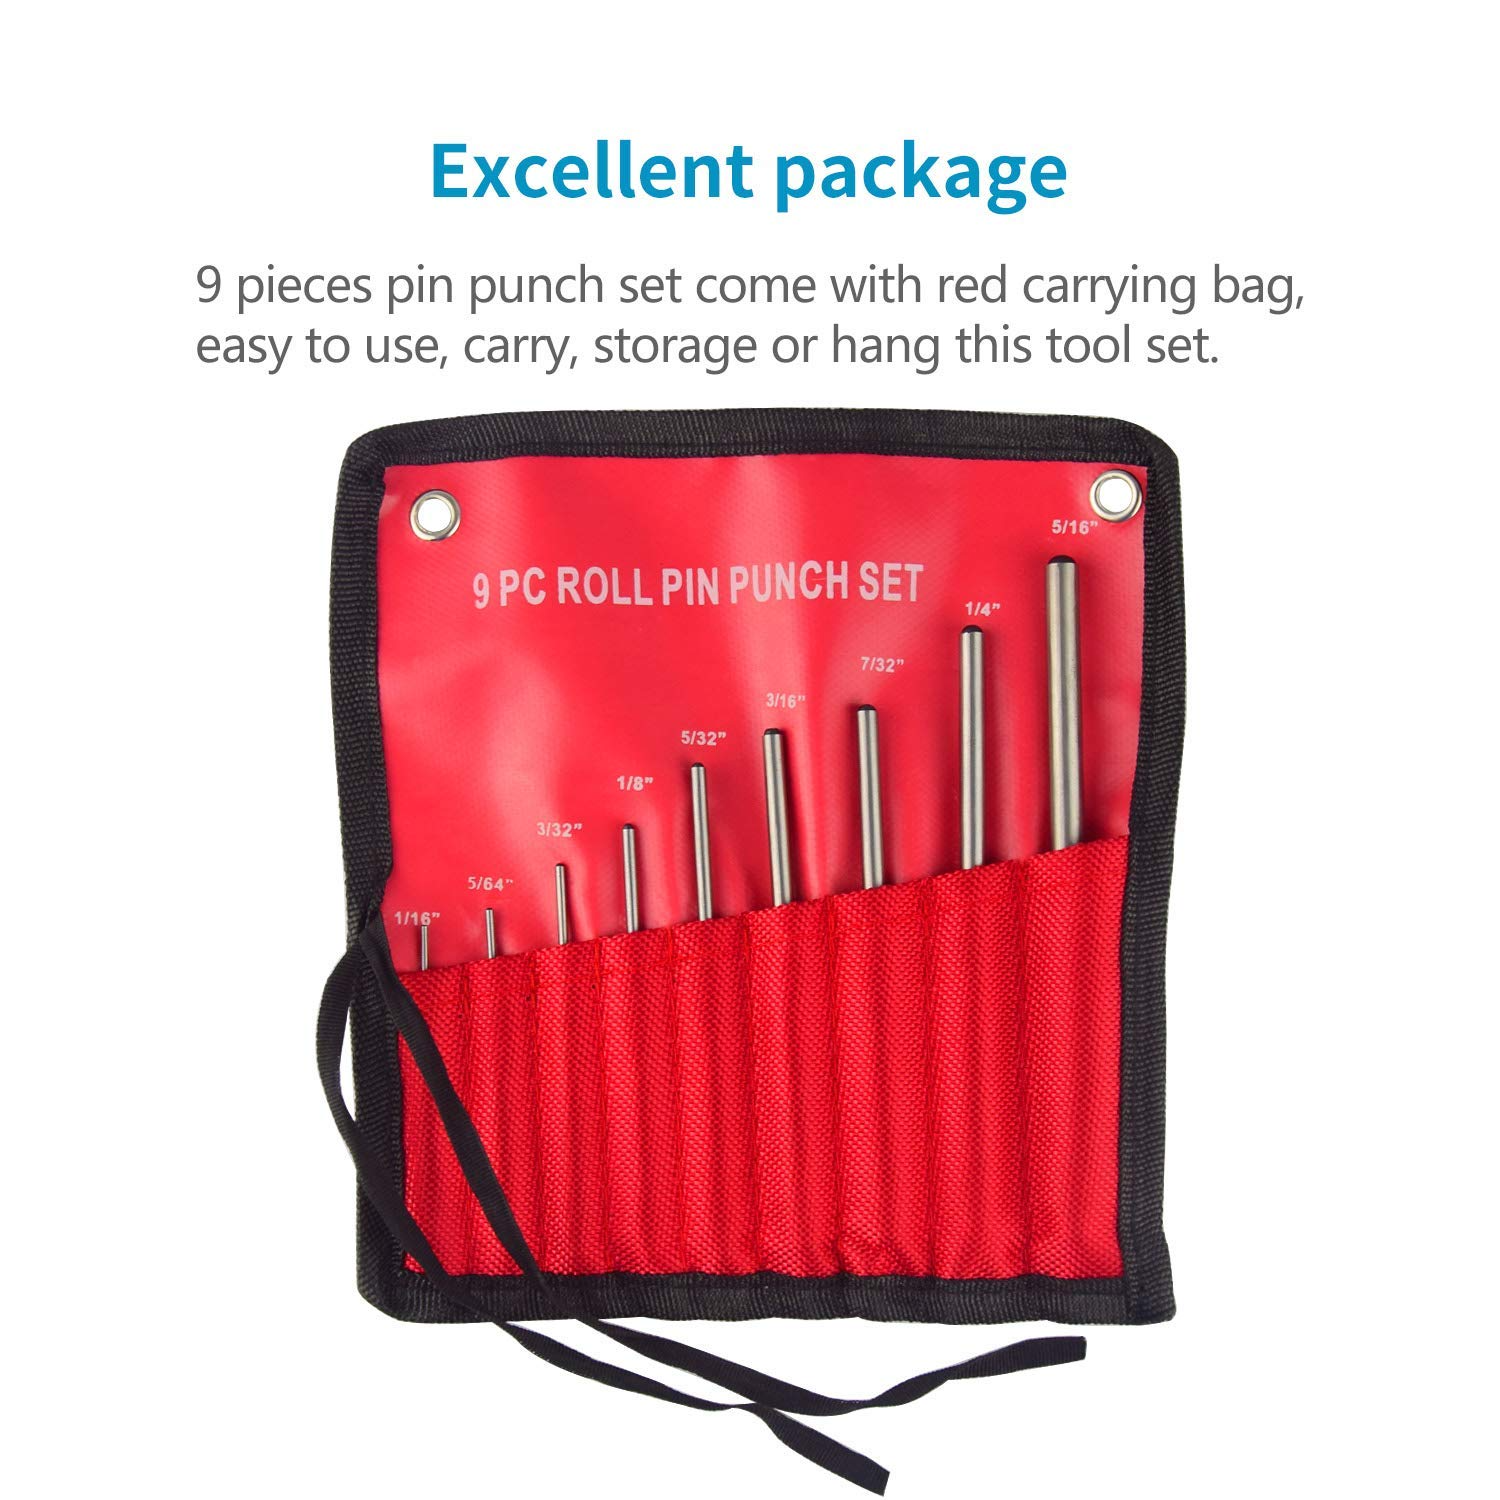 Feyachi PS27 Roll Pin Punch Set - Steel Tool Kit